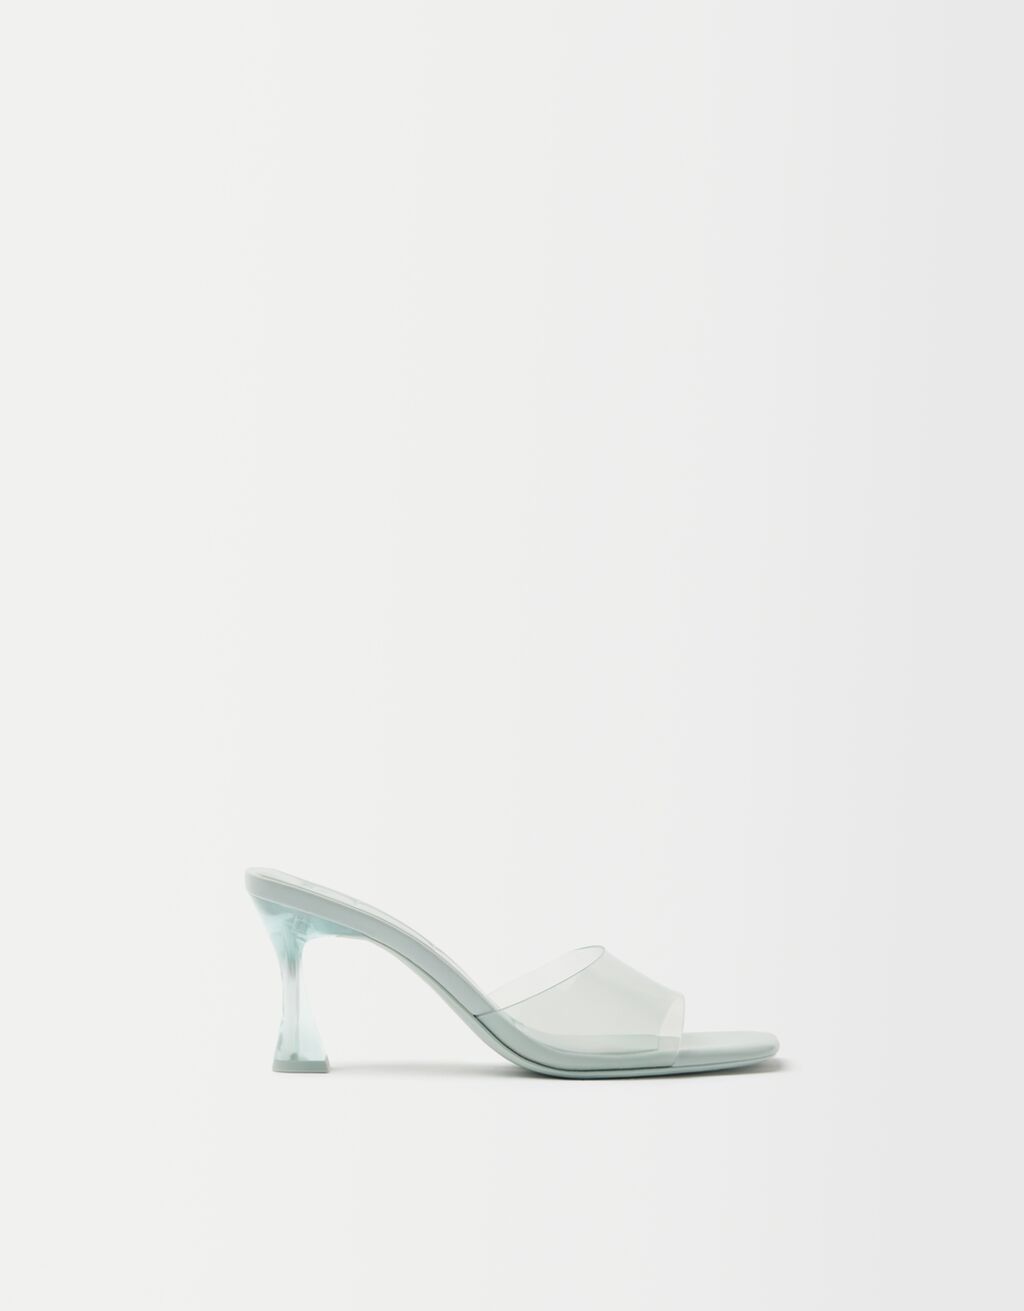 Vinyl sandals with methacrylate heels